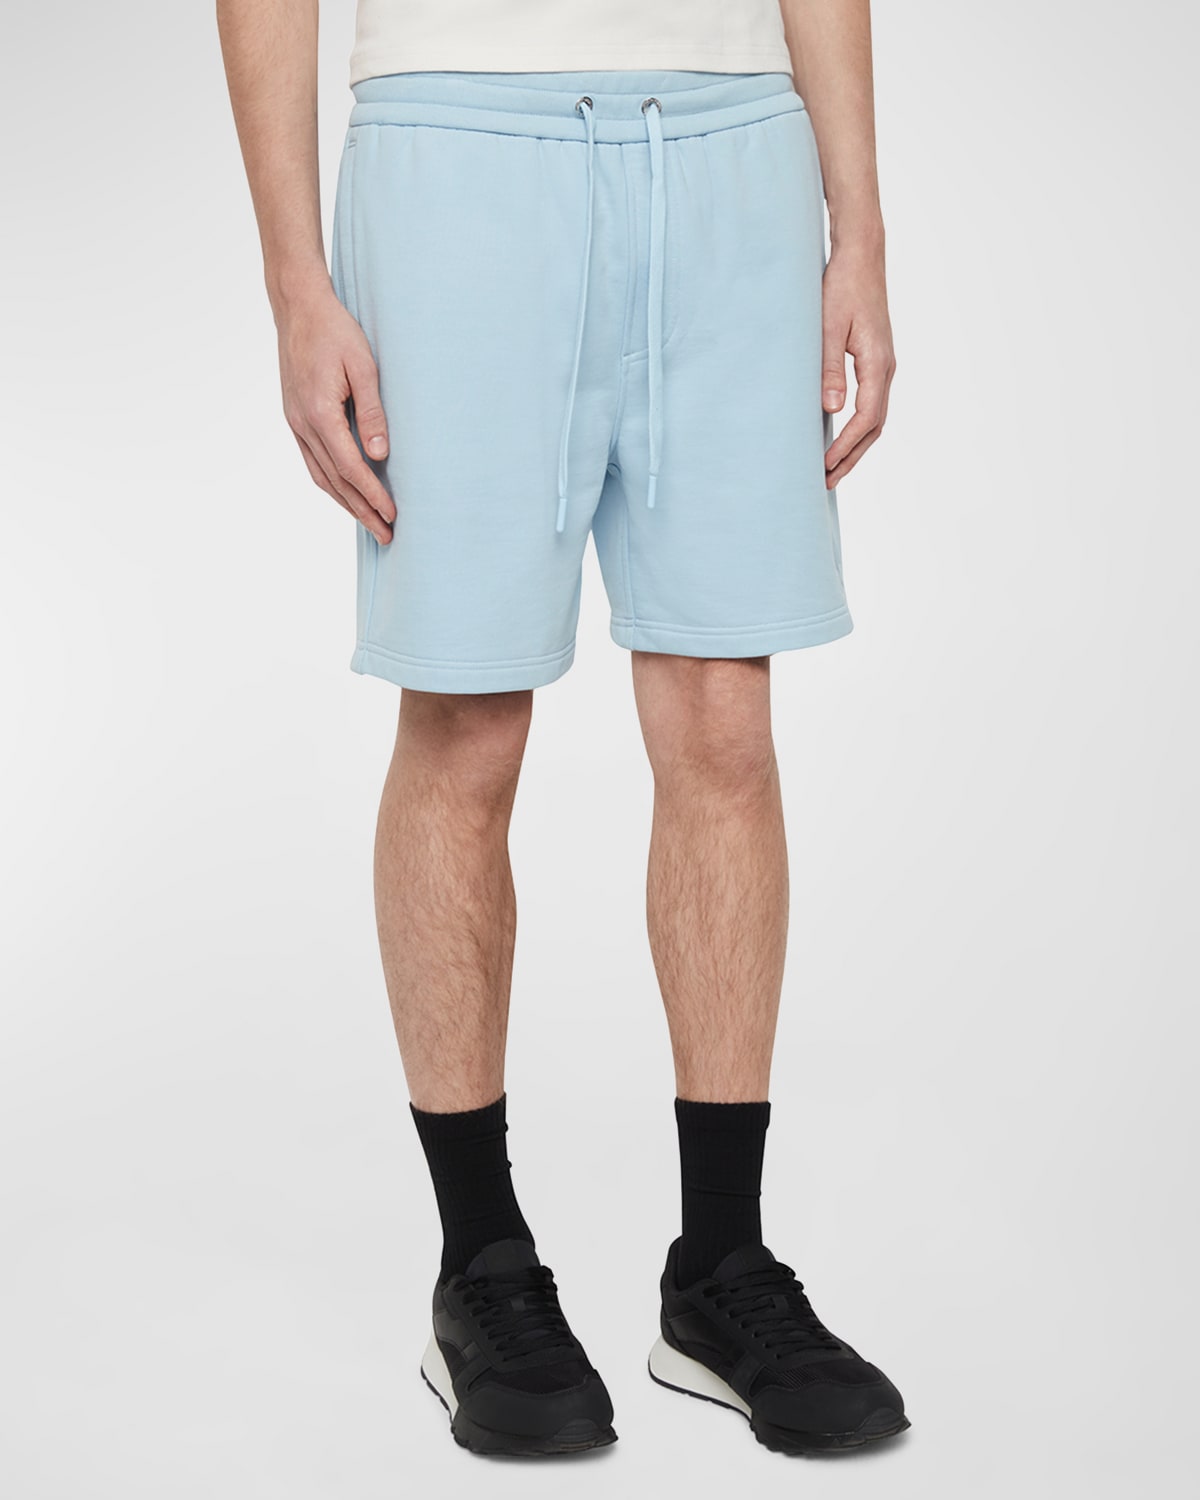 Men's Clyde Shorts